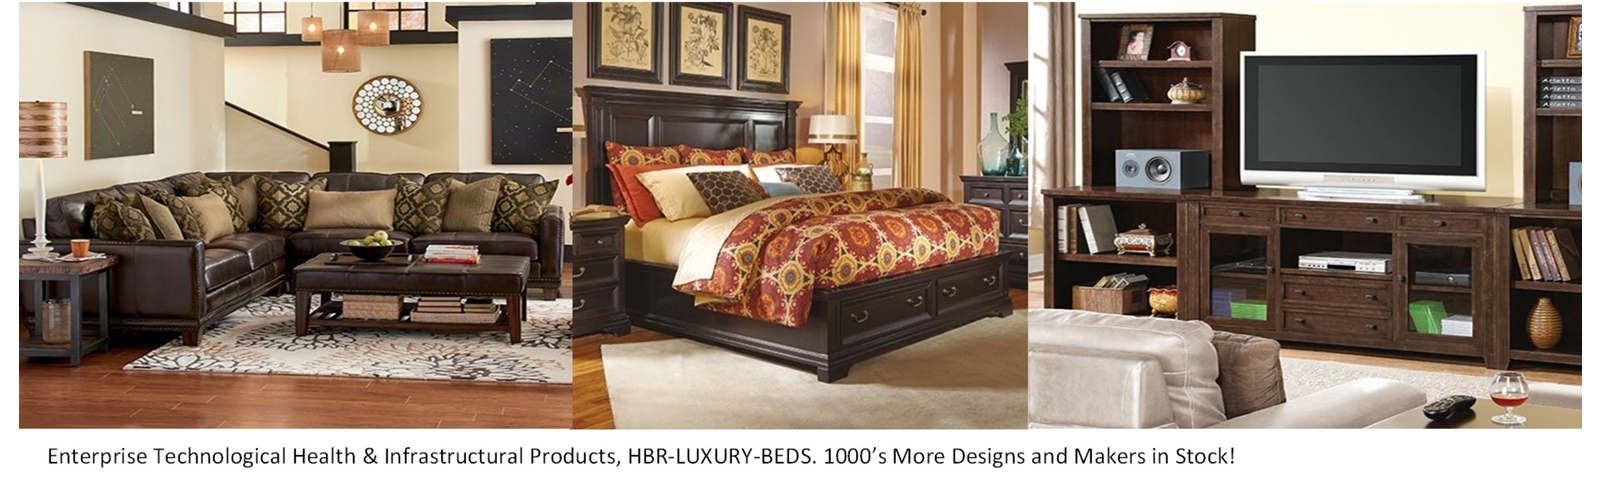 HBR-LUXURY-BEDS